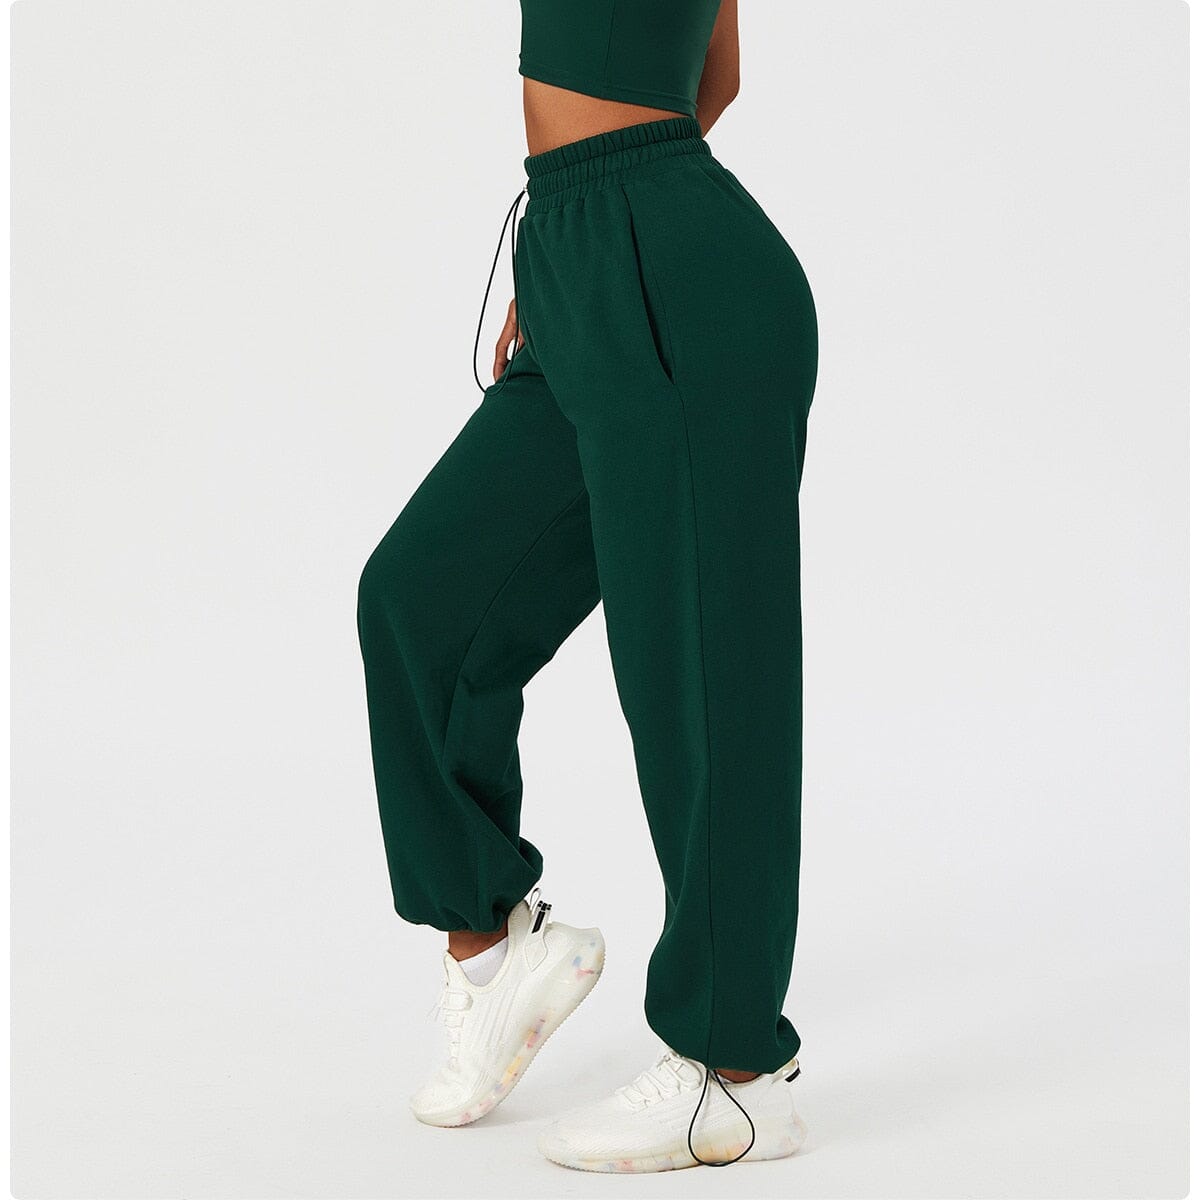 Frost Drawstring Pants Activewear Truetights Retro Green S 